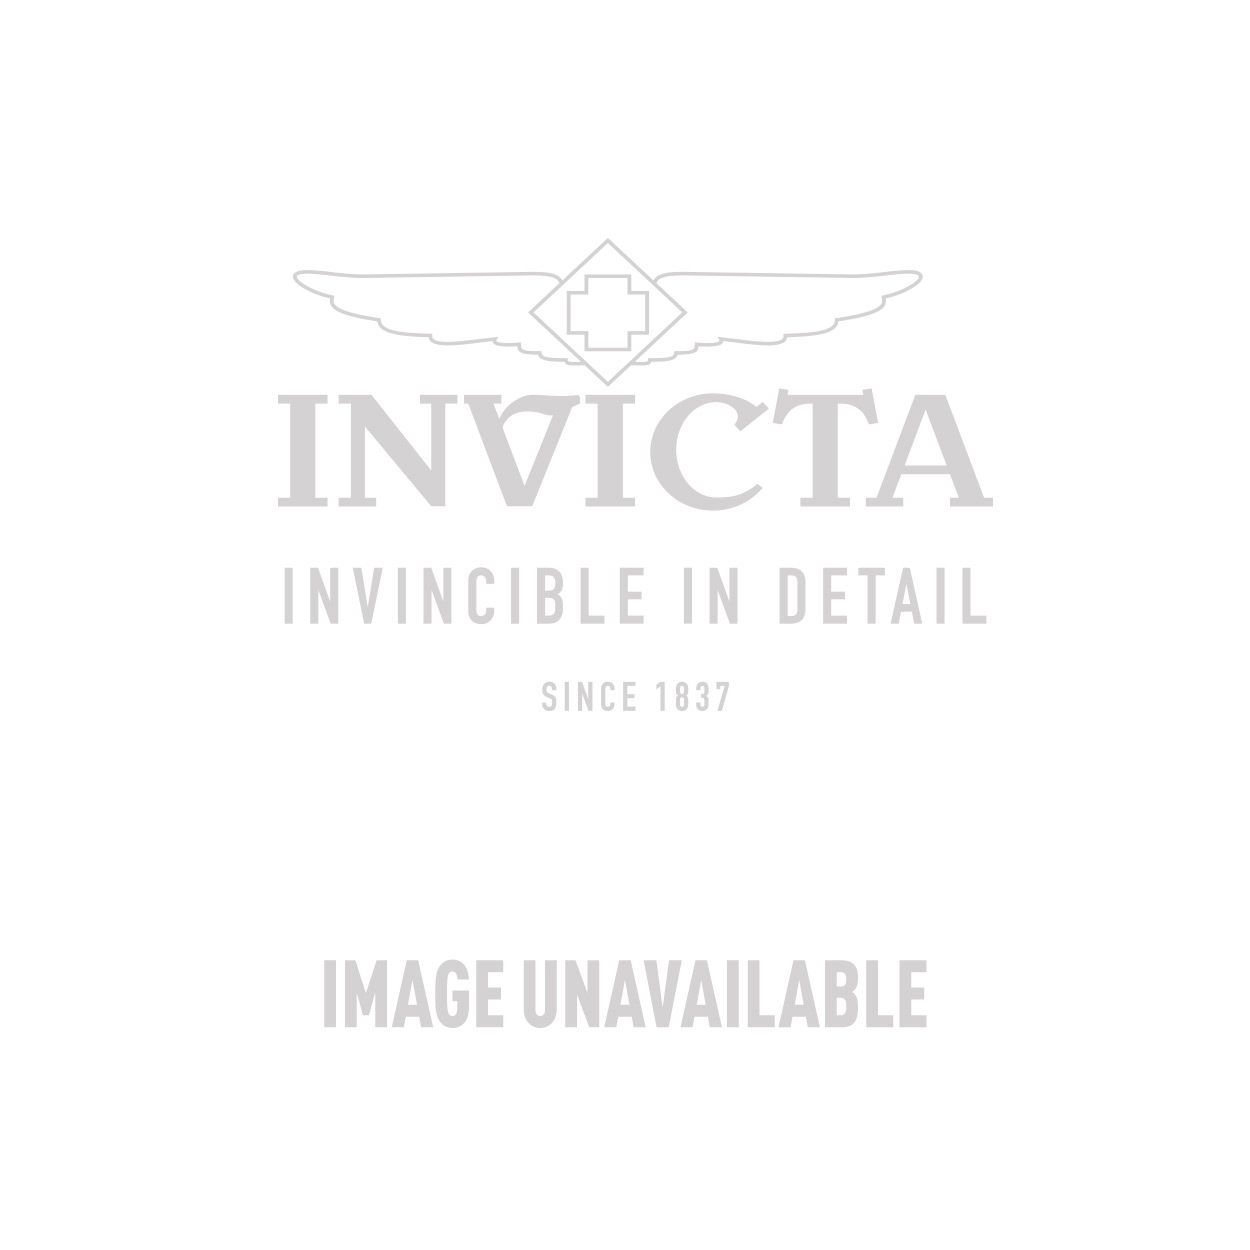 invicta-8926.jpg